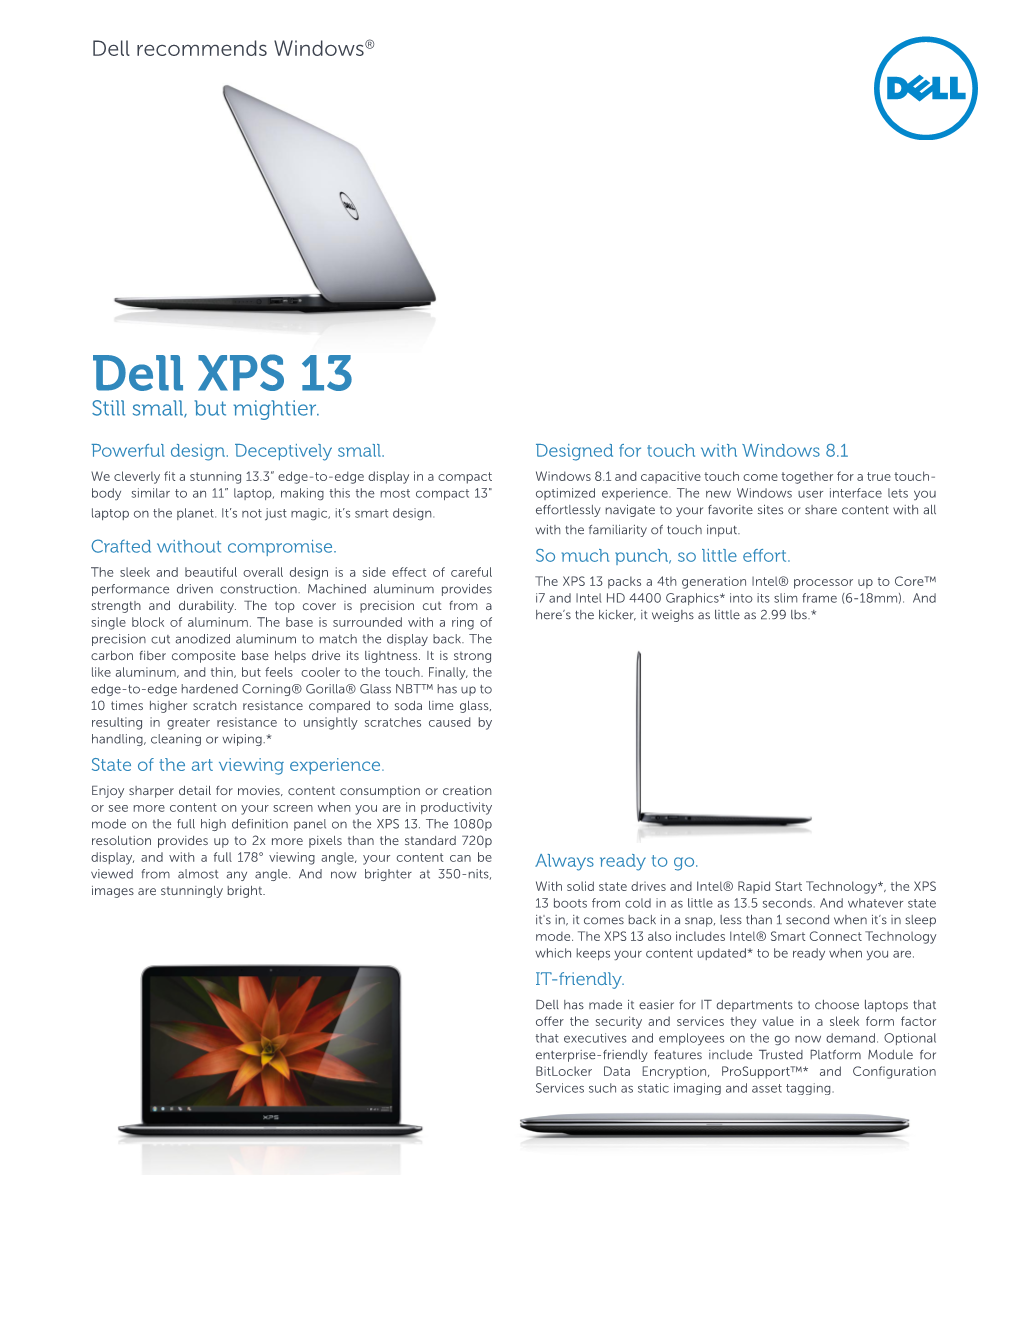 Dell XPS 13 Still Small, but Mightier